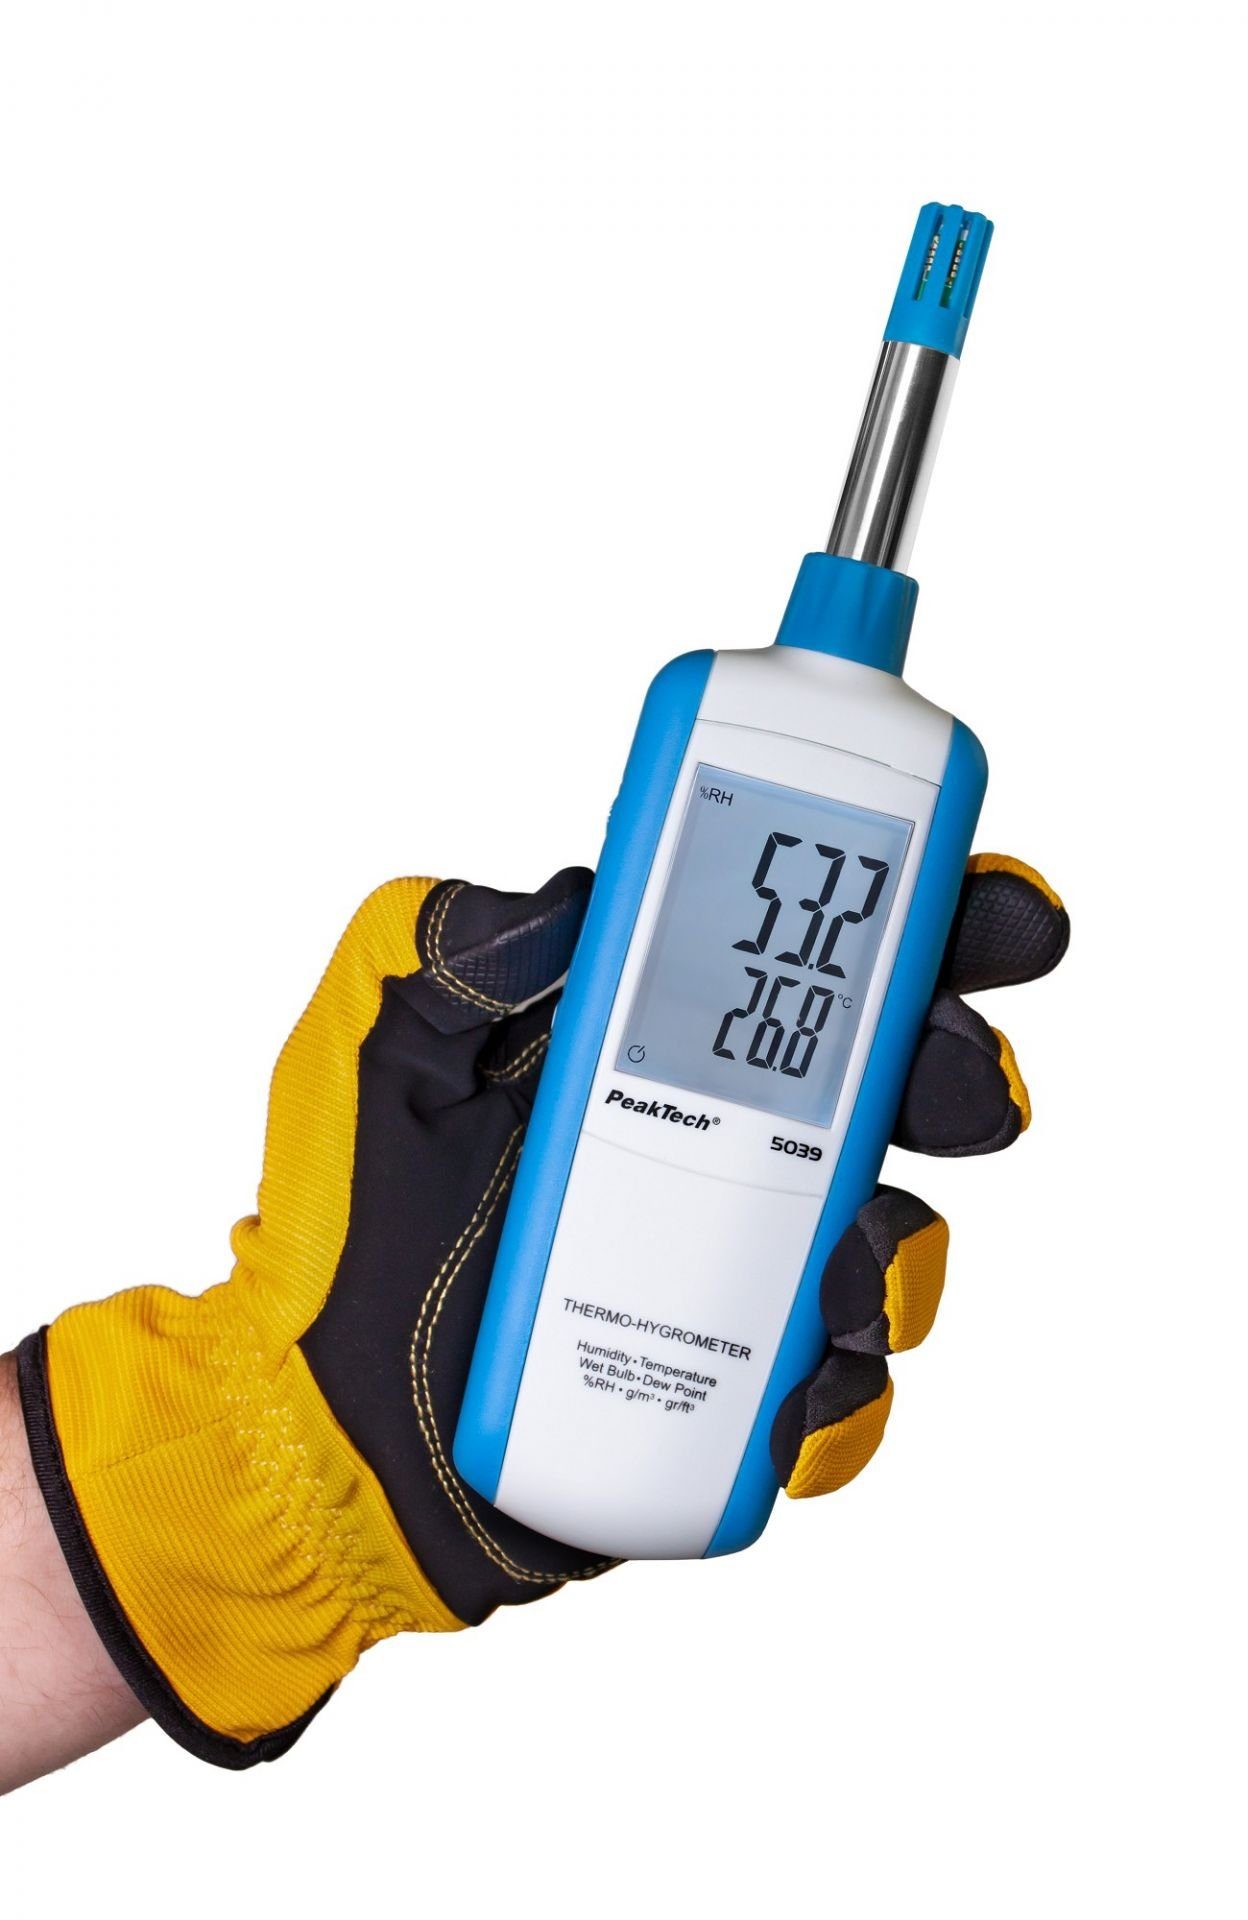 PeakTech Thermometer-Hygrometer, 5039: PeakTech Digital Hygrometer (1-St)